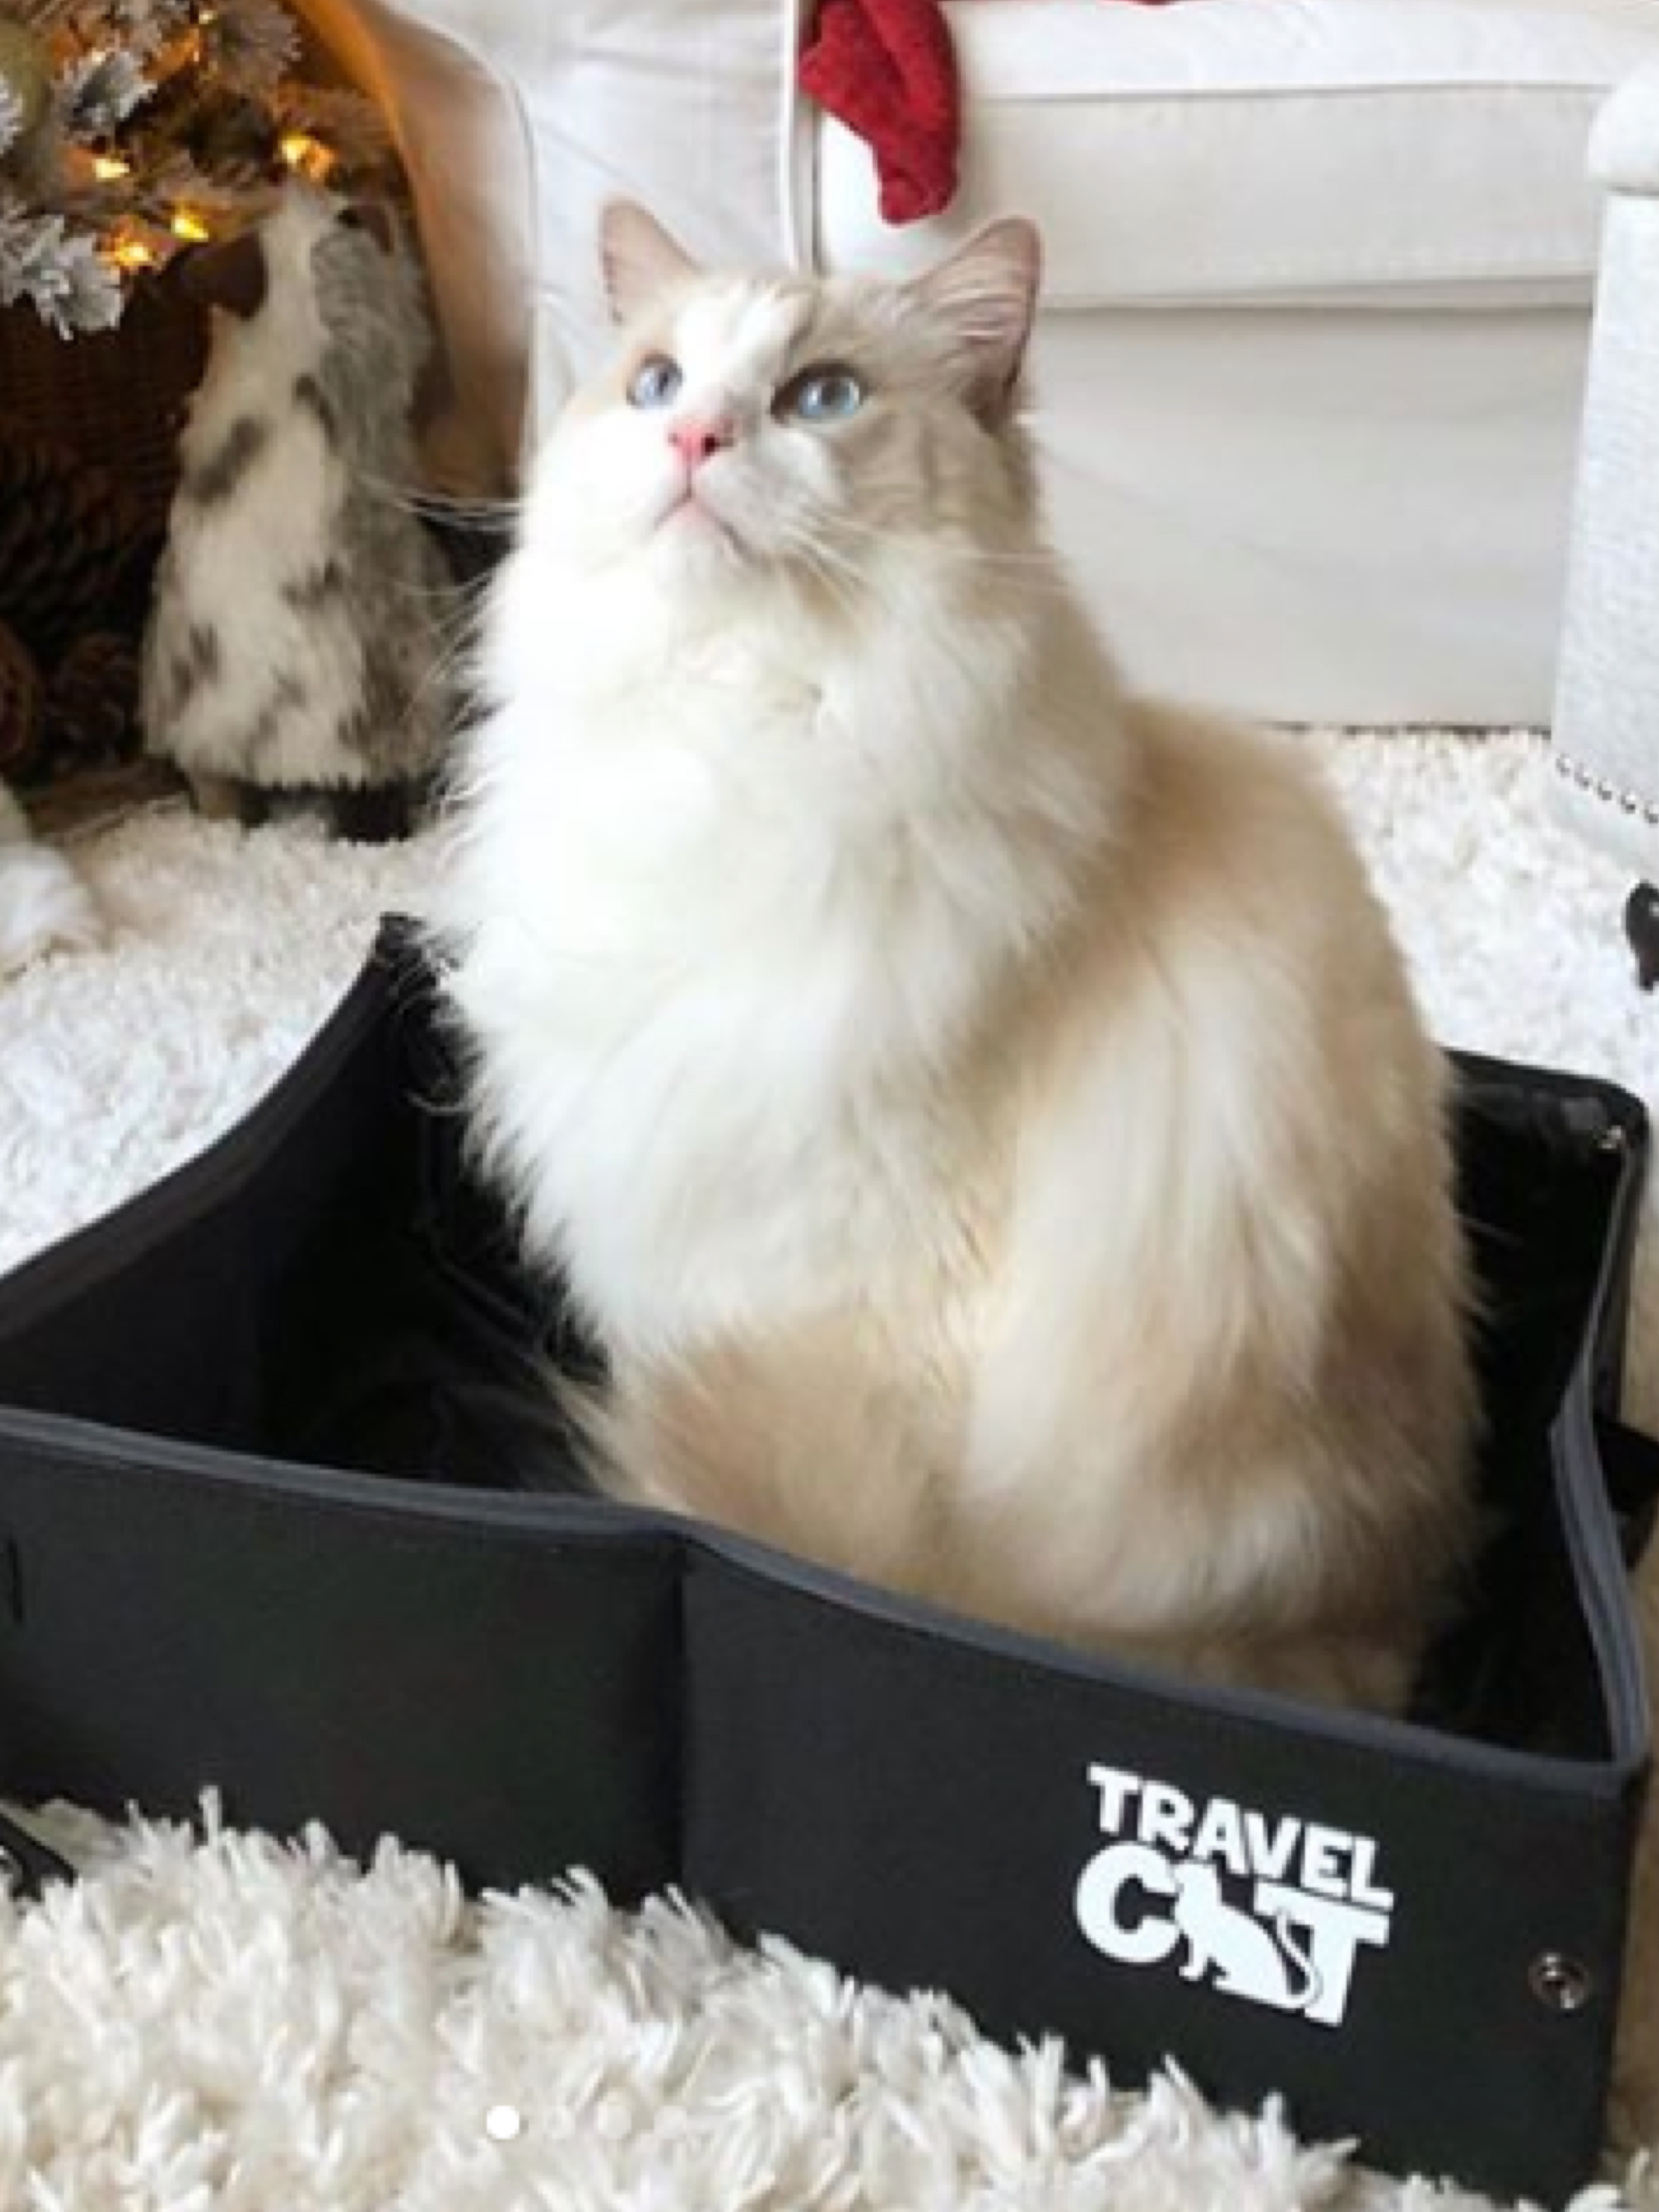 travel carrier cat